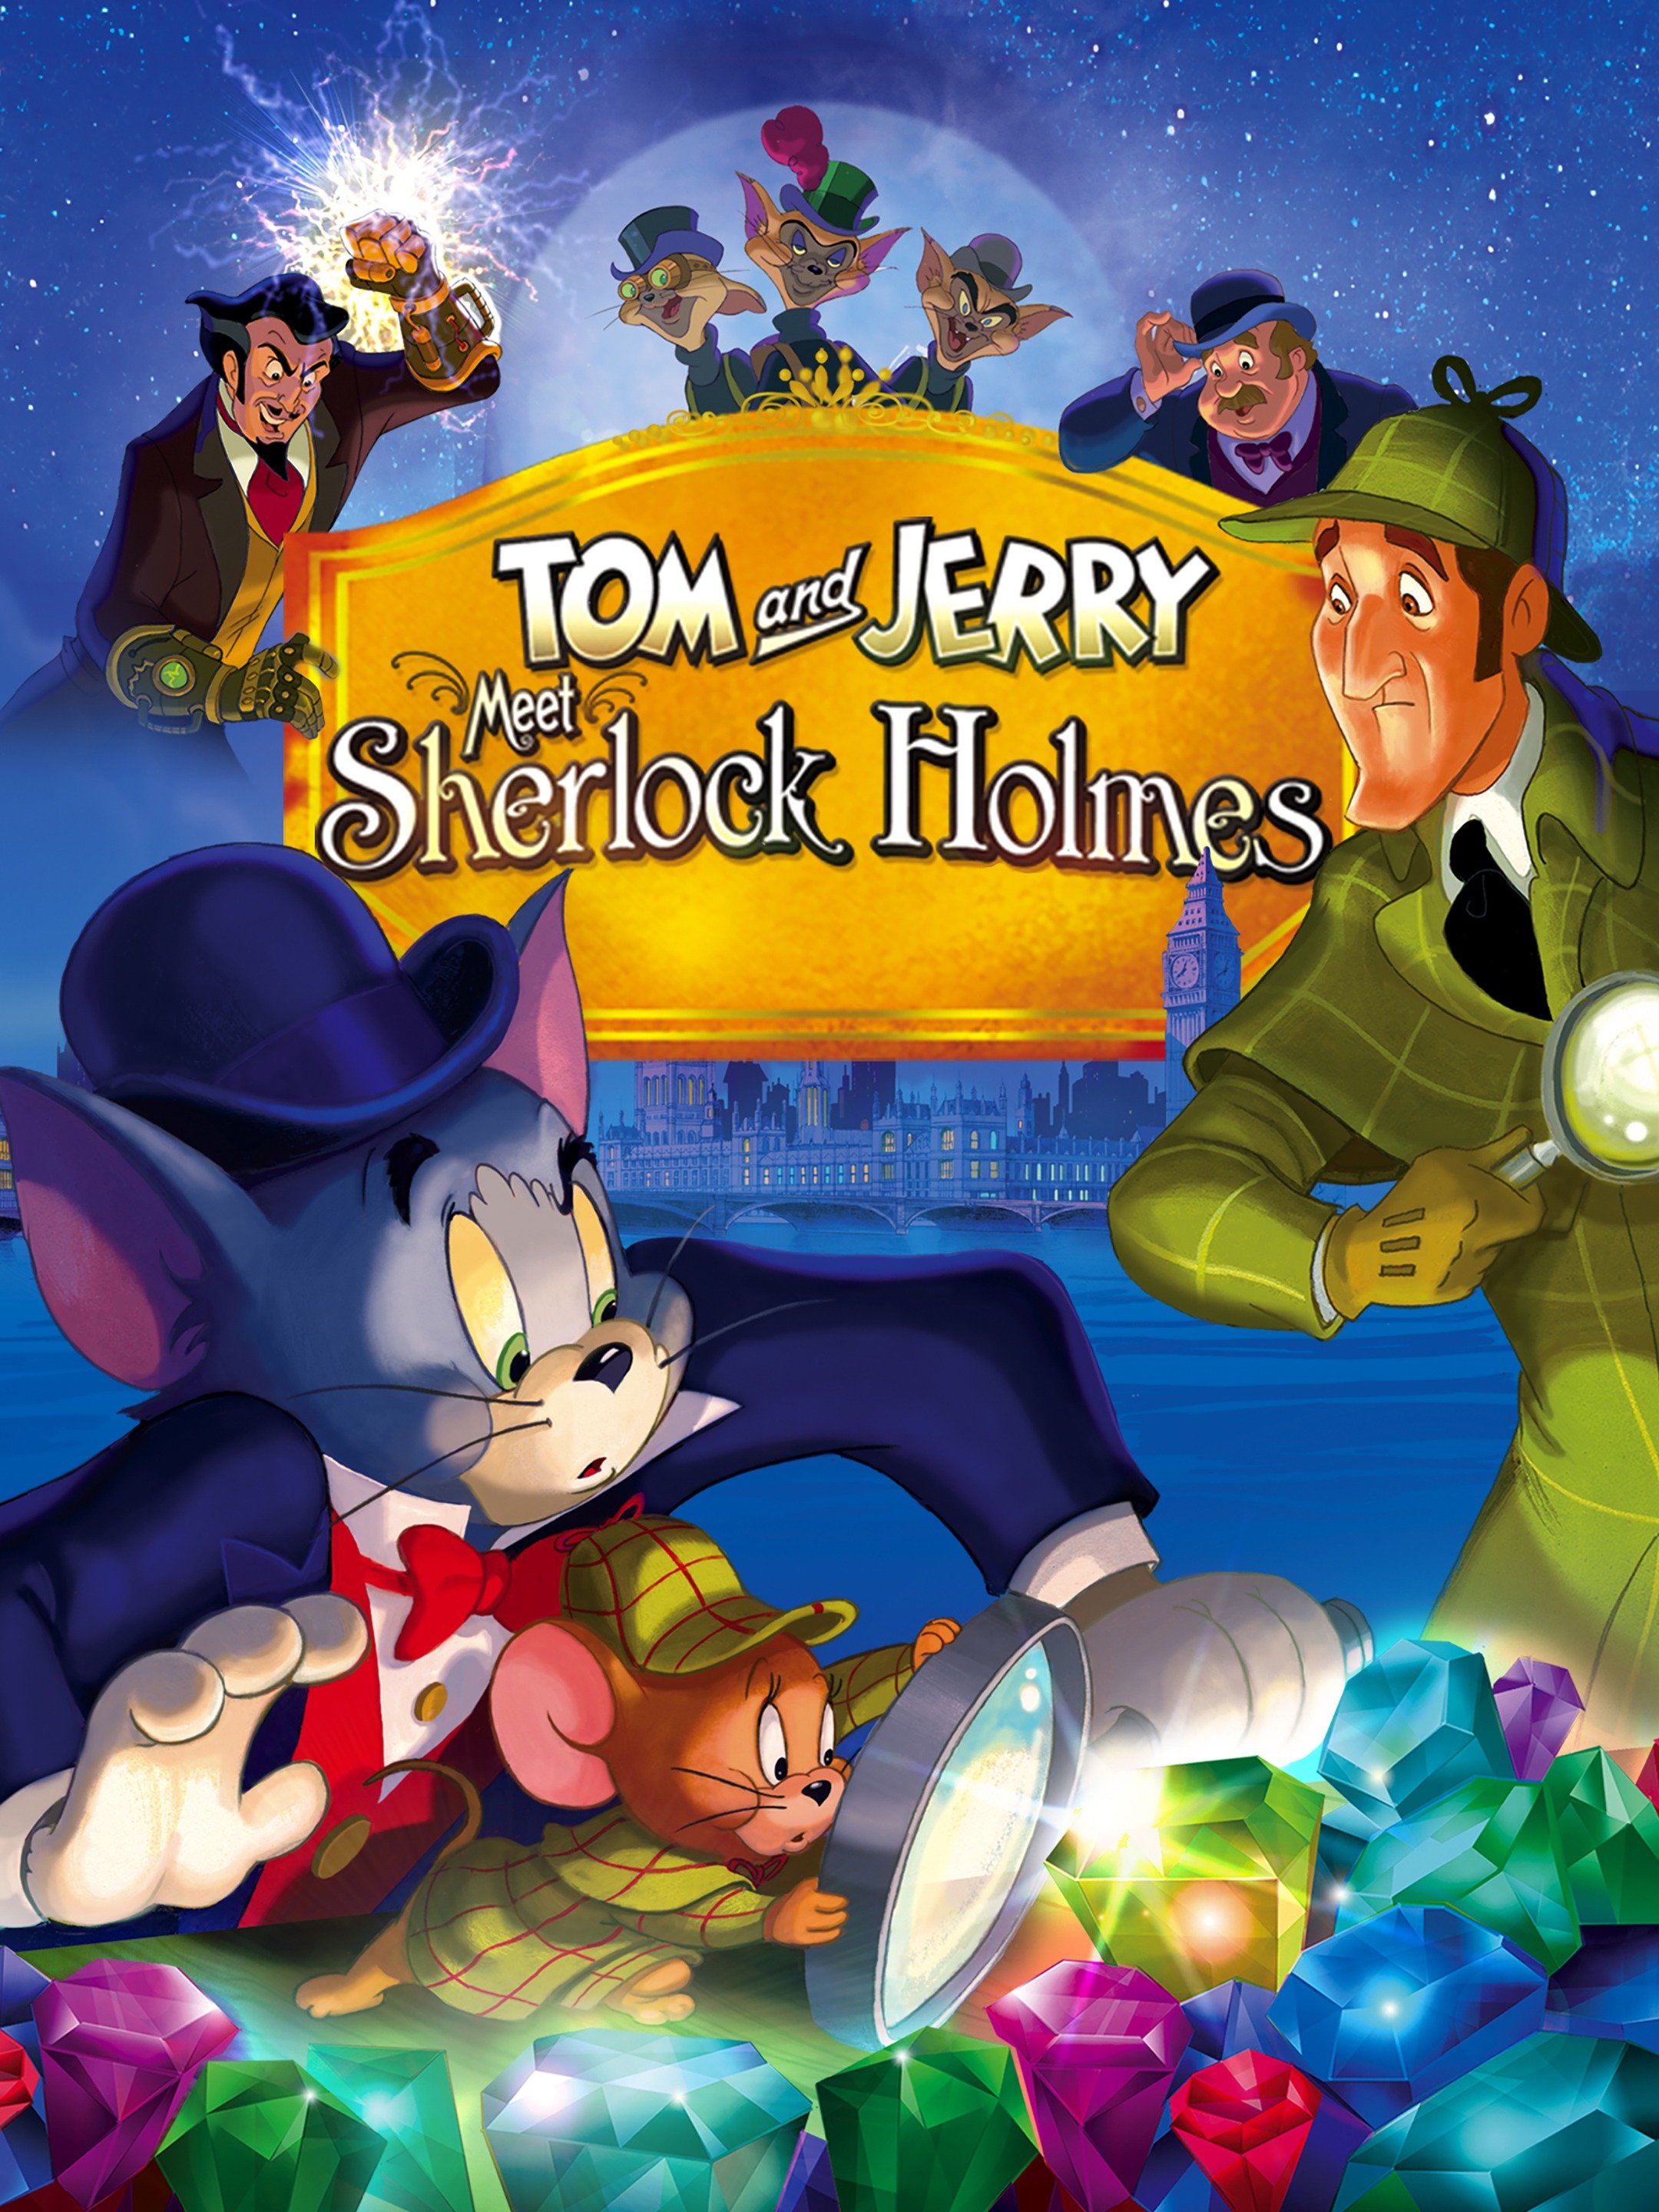 Tom and Jerry meet Sherlock Holmes : original movie